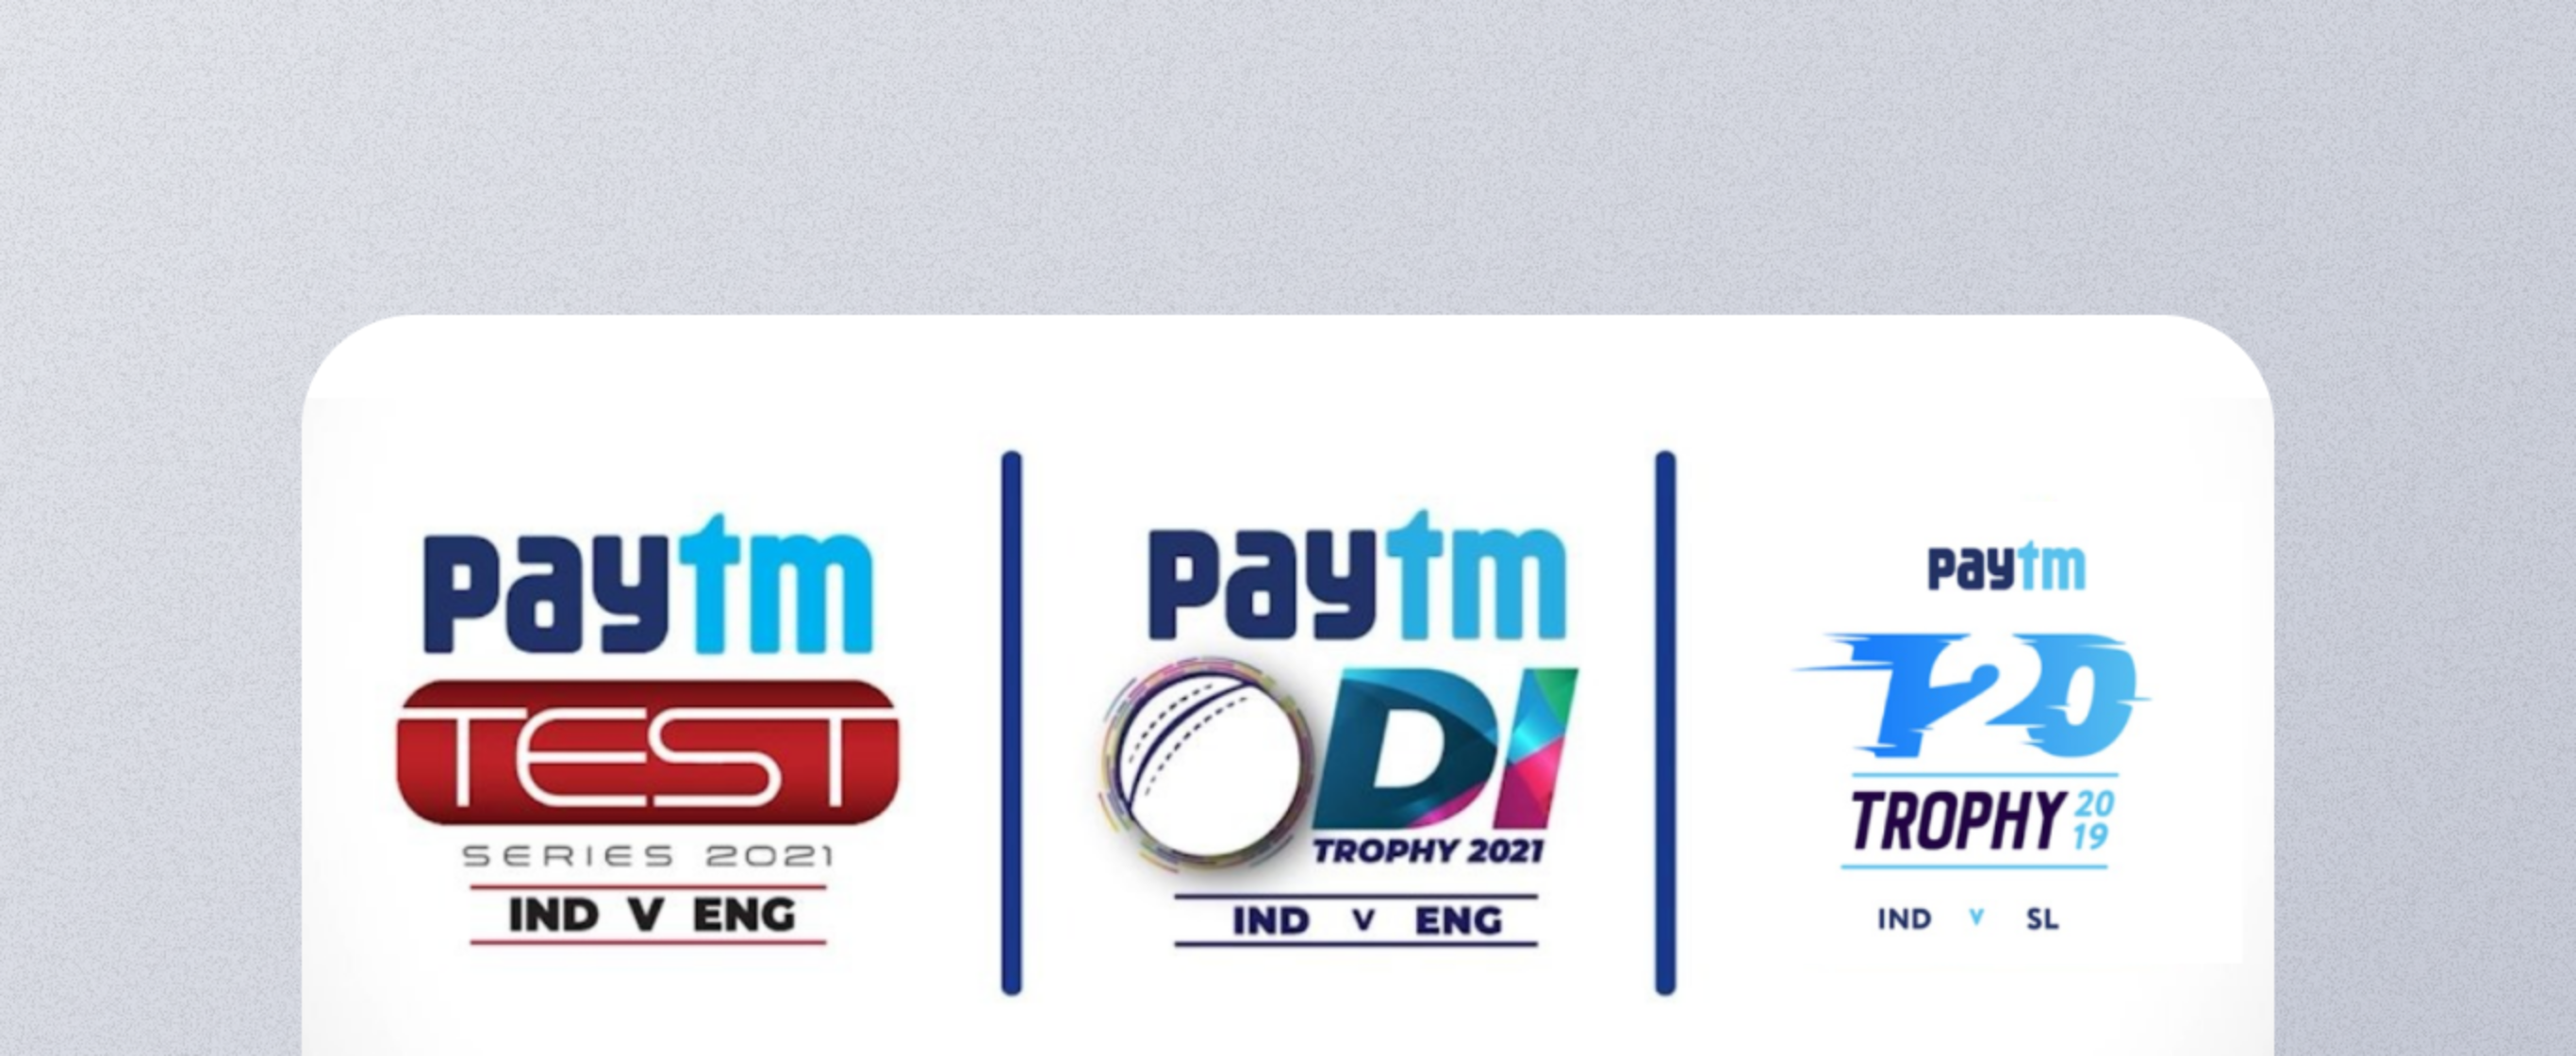 Bcci Logo, Logotype - India Cricket Team Logo Png, Transparent Png -  6211x3150(#2809829) - PngFind